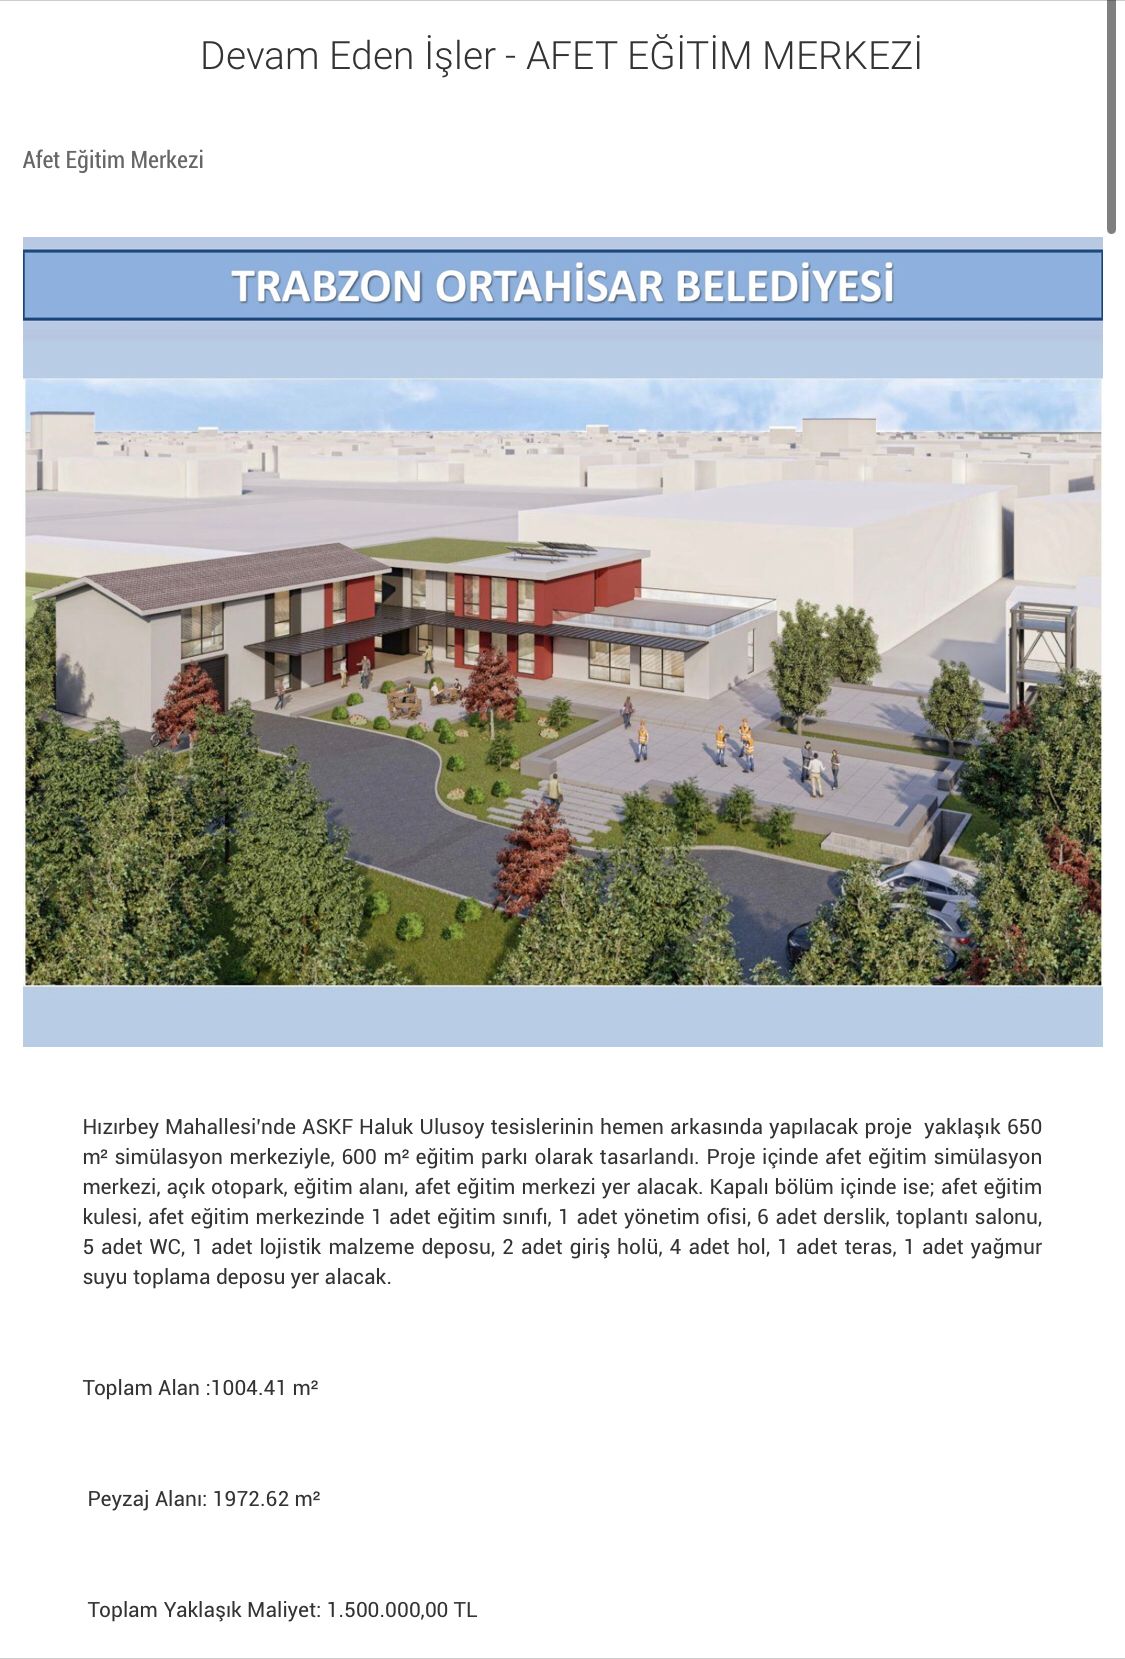 İlçe başkanı Trabzon’da 1.5 milyon TL’lik projenin akıbetini sordu!